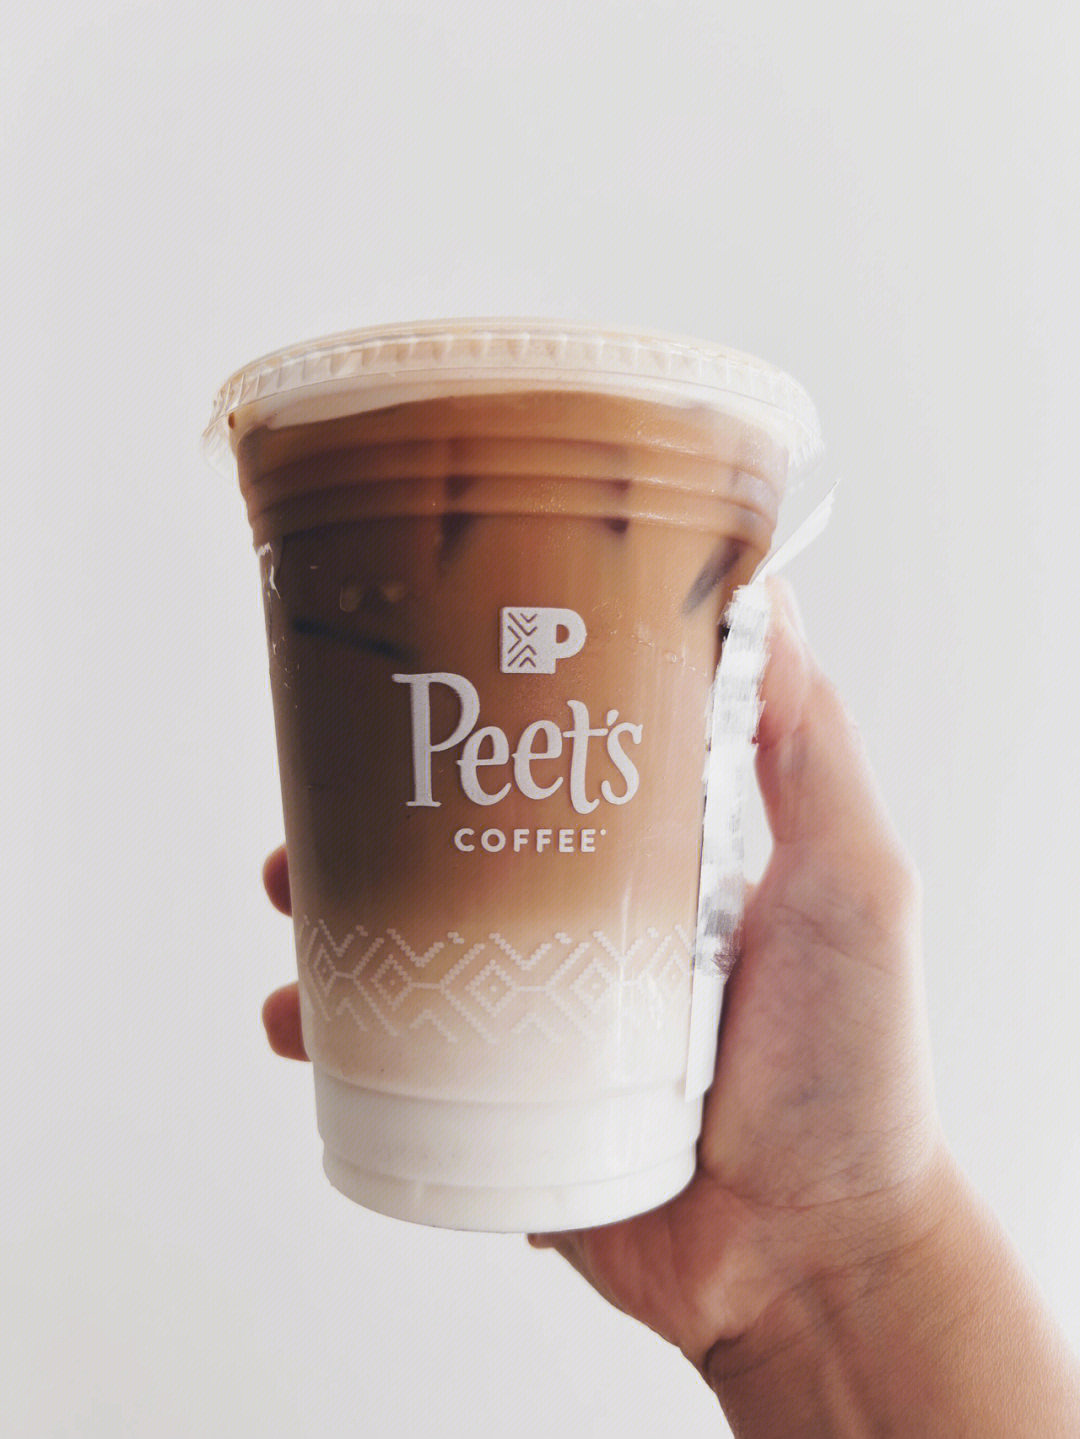 peets coffee介绍图片